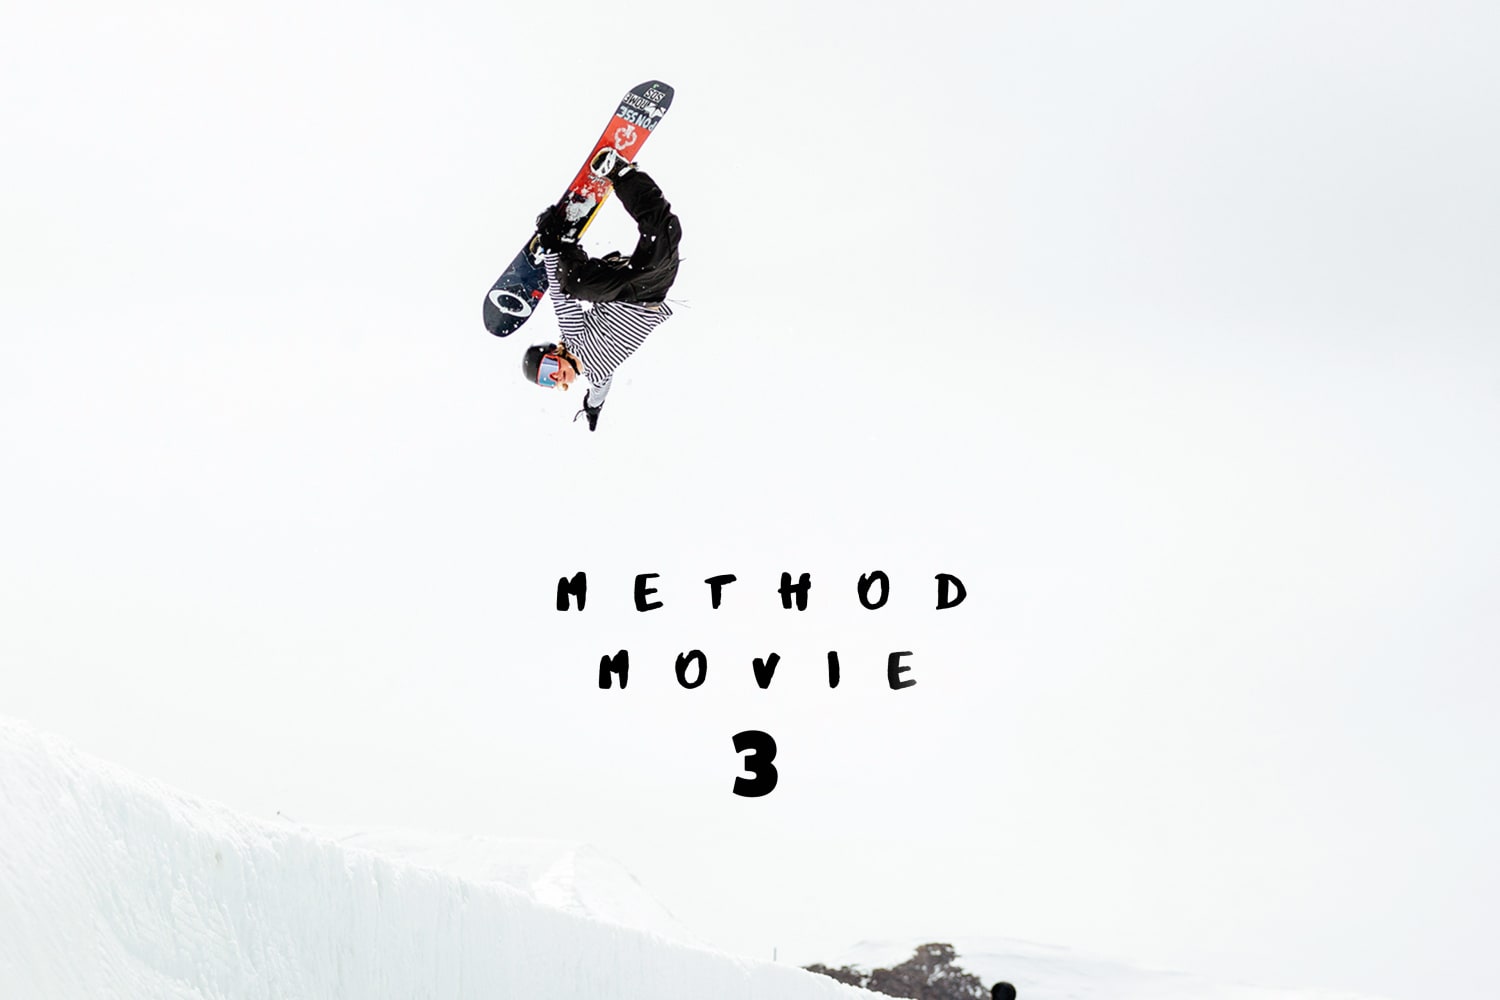 Method Movie 3: Посмотрите весь фильм про сноубординг